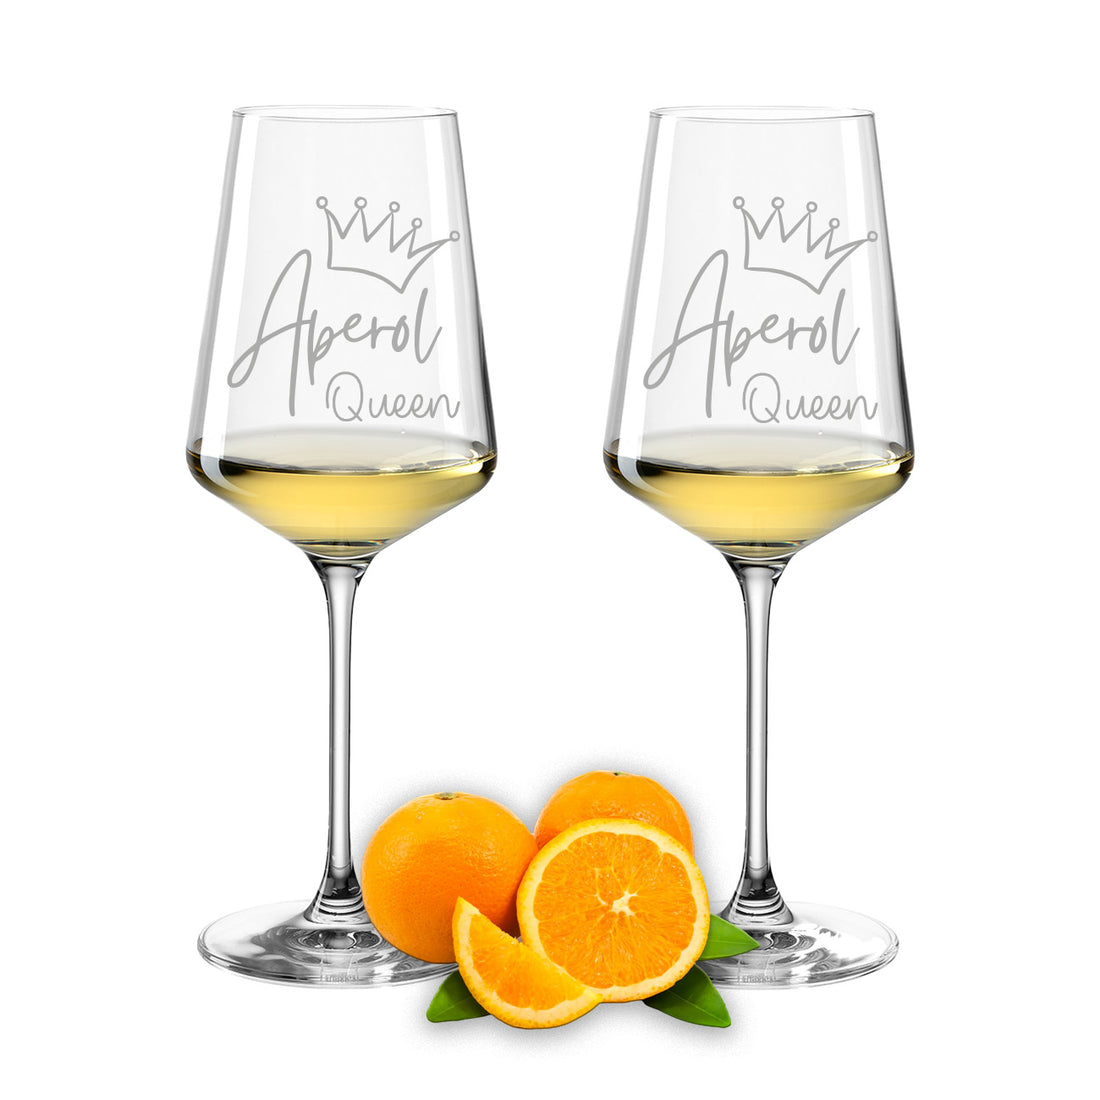 Weinglas mit Gravur Leonardo Puccini "APEROL QUEEN" 2 Gläser